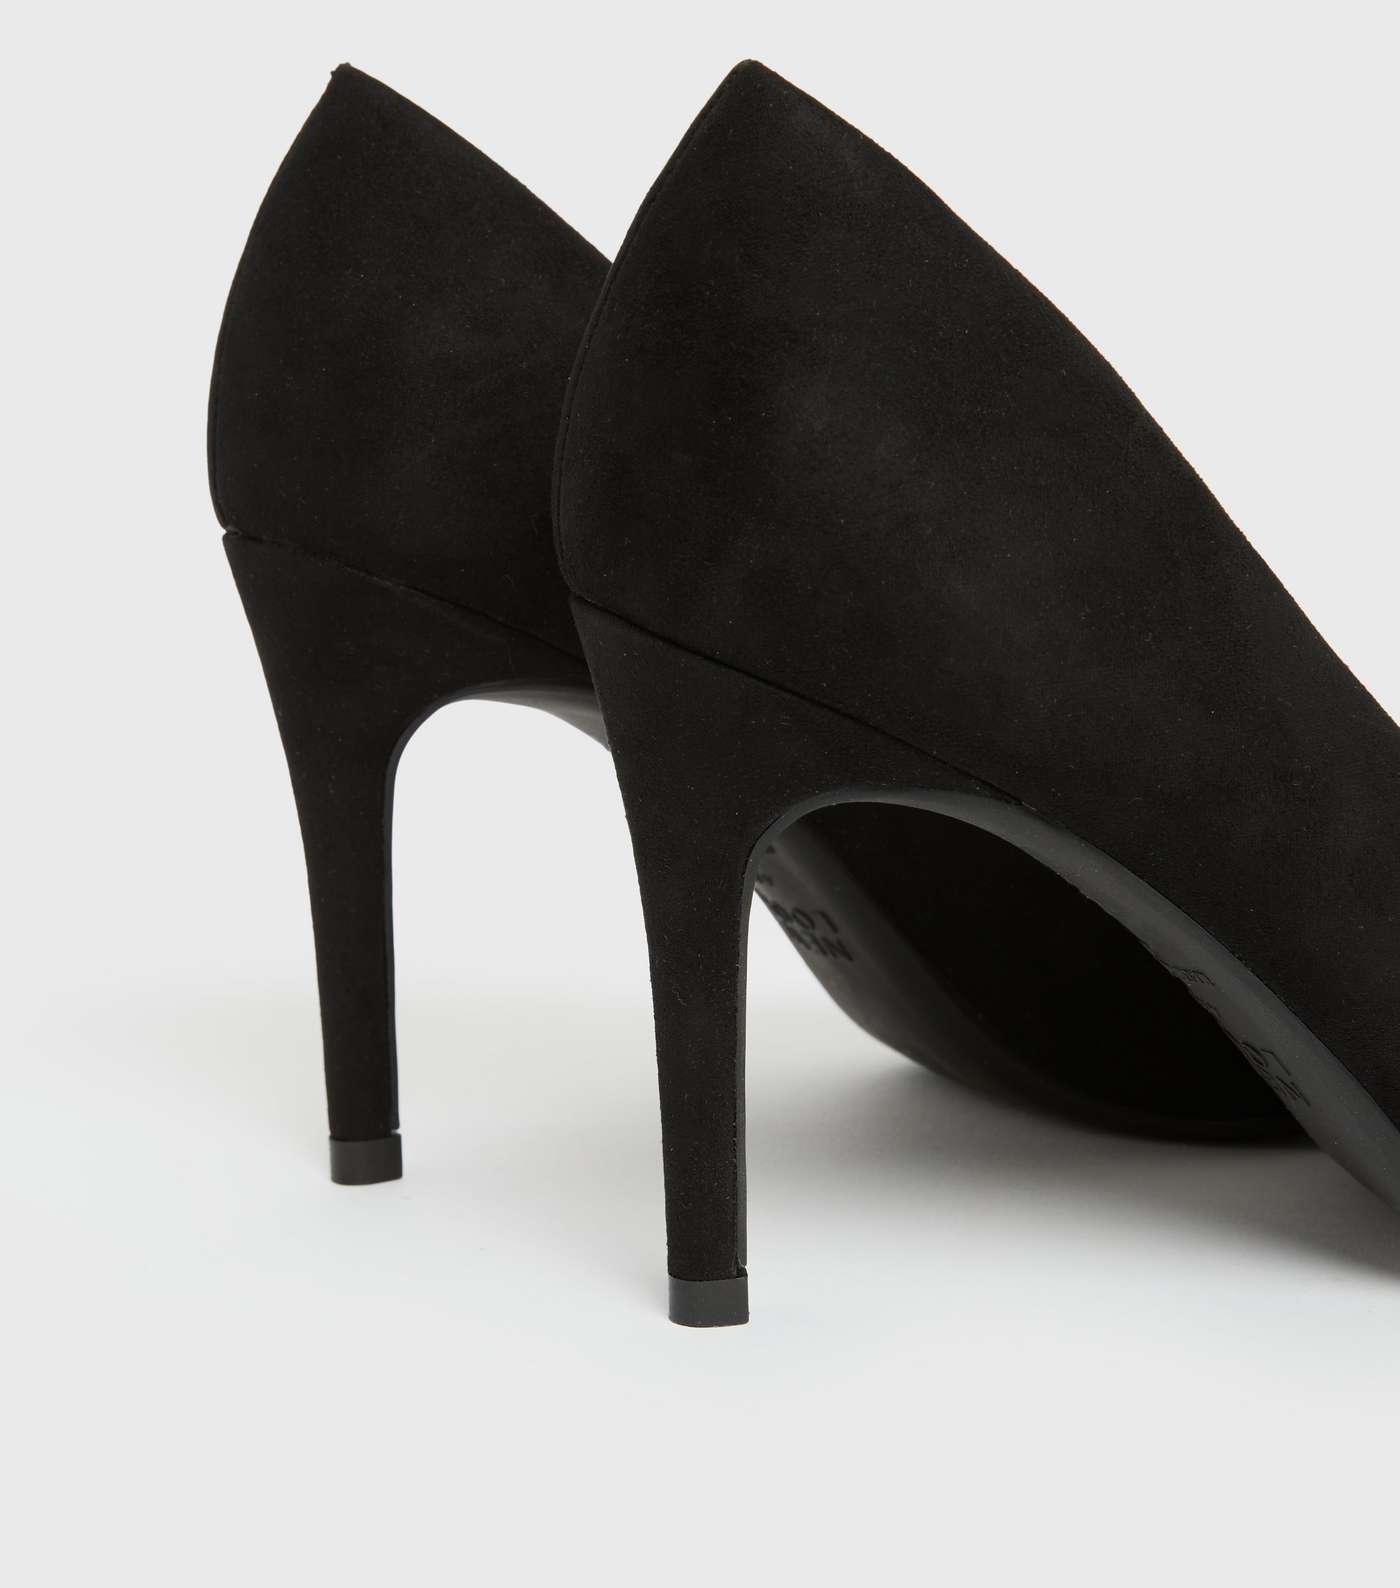 Black Suedette Pointed Stiletto Heel Court Shoes Image 4